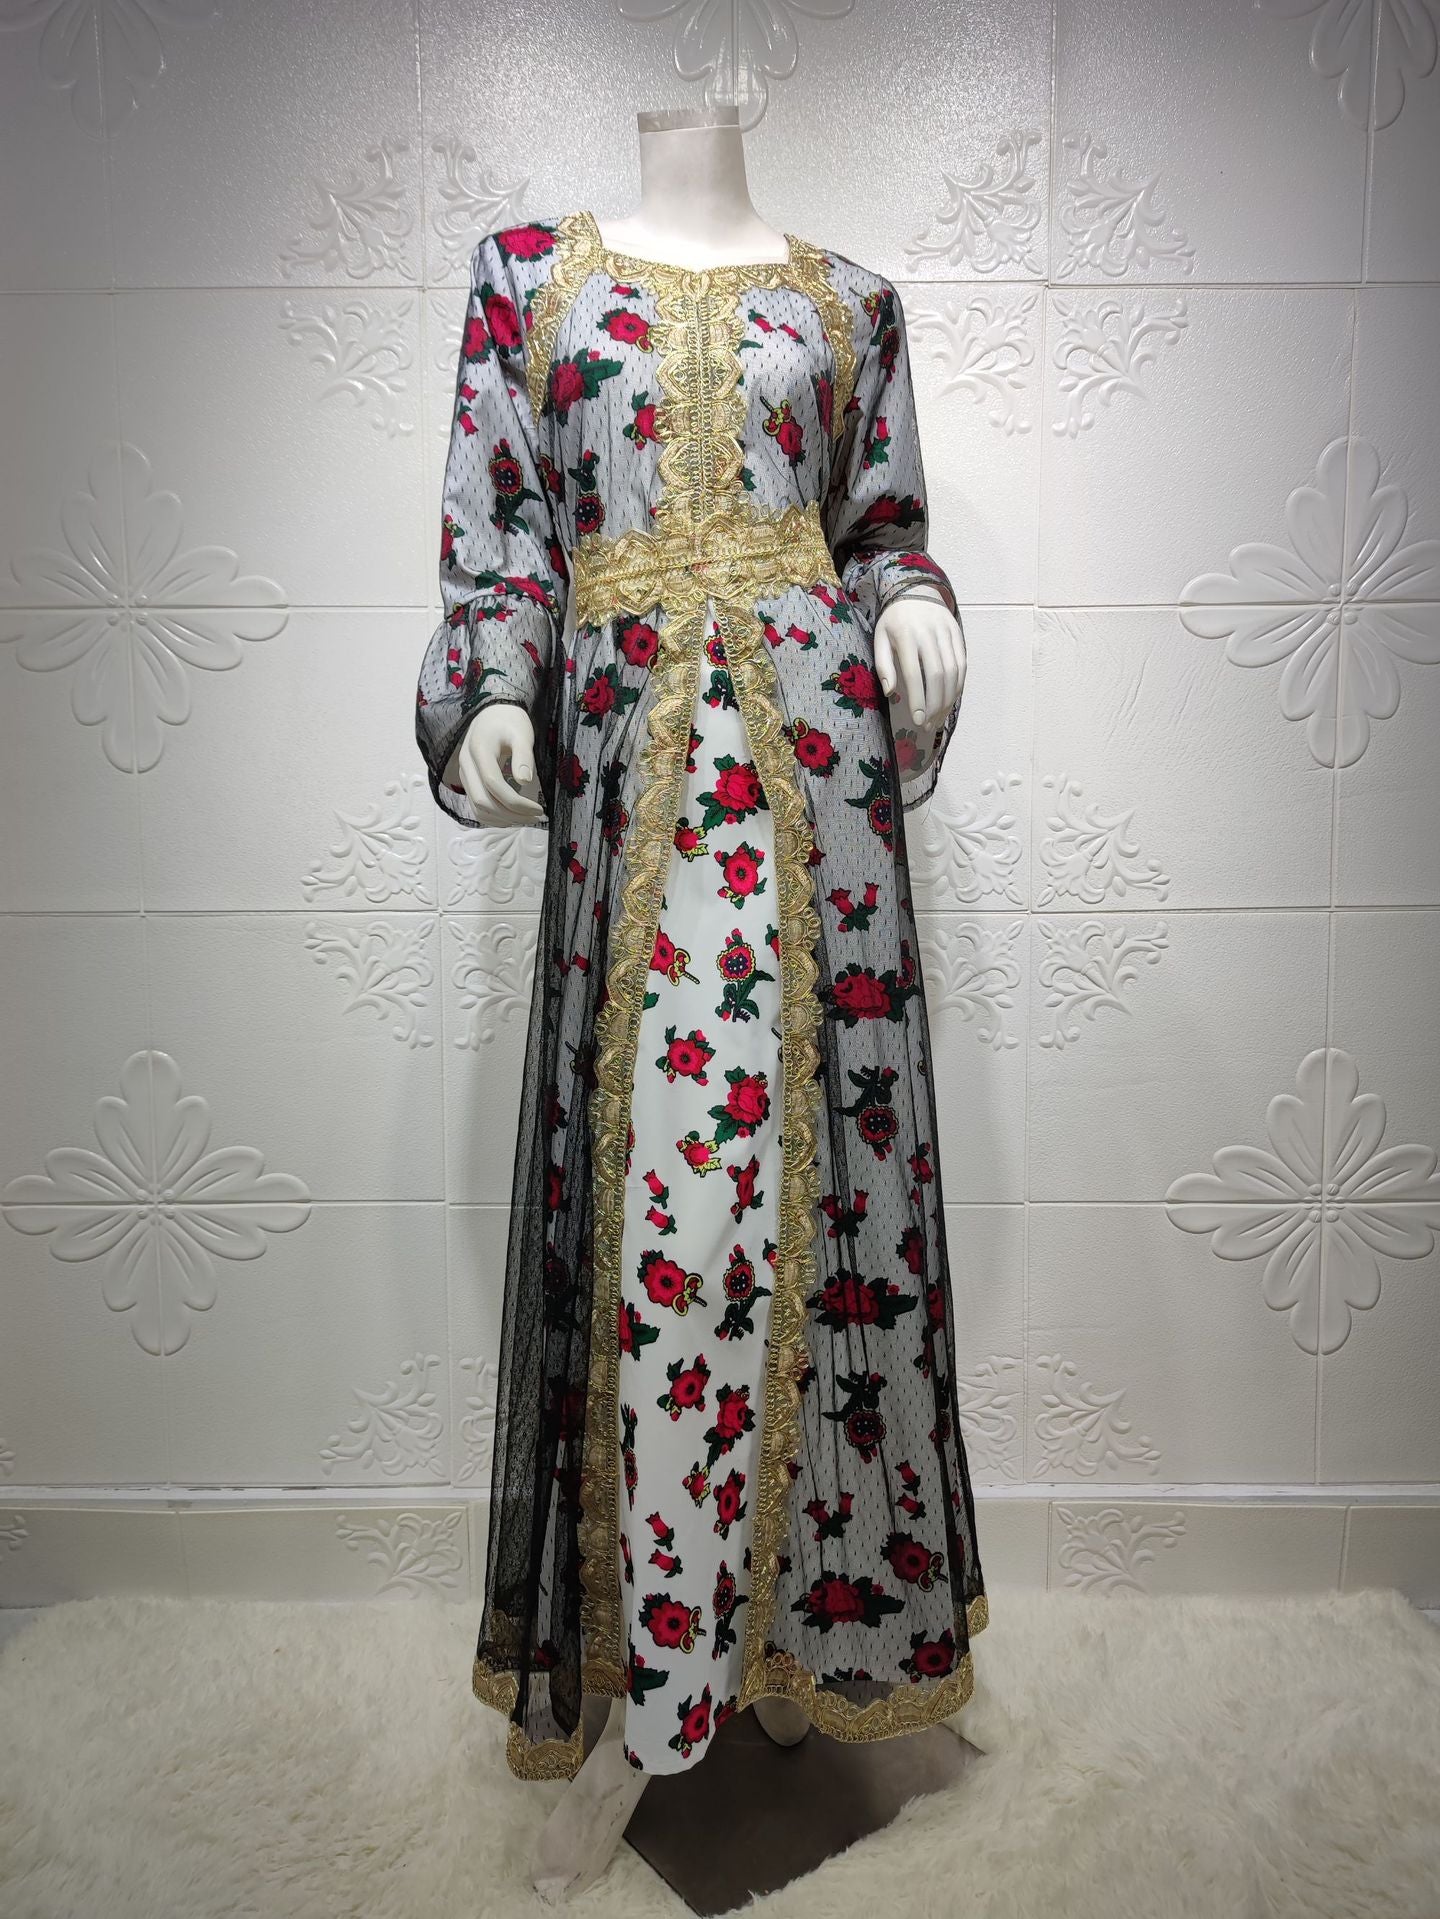 Morocco Kaftan Islamic Clothing Female Fashion Embroidery Mesh Dress